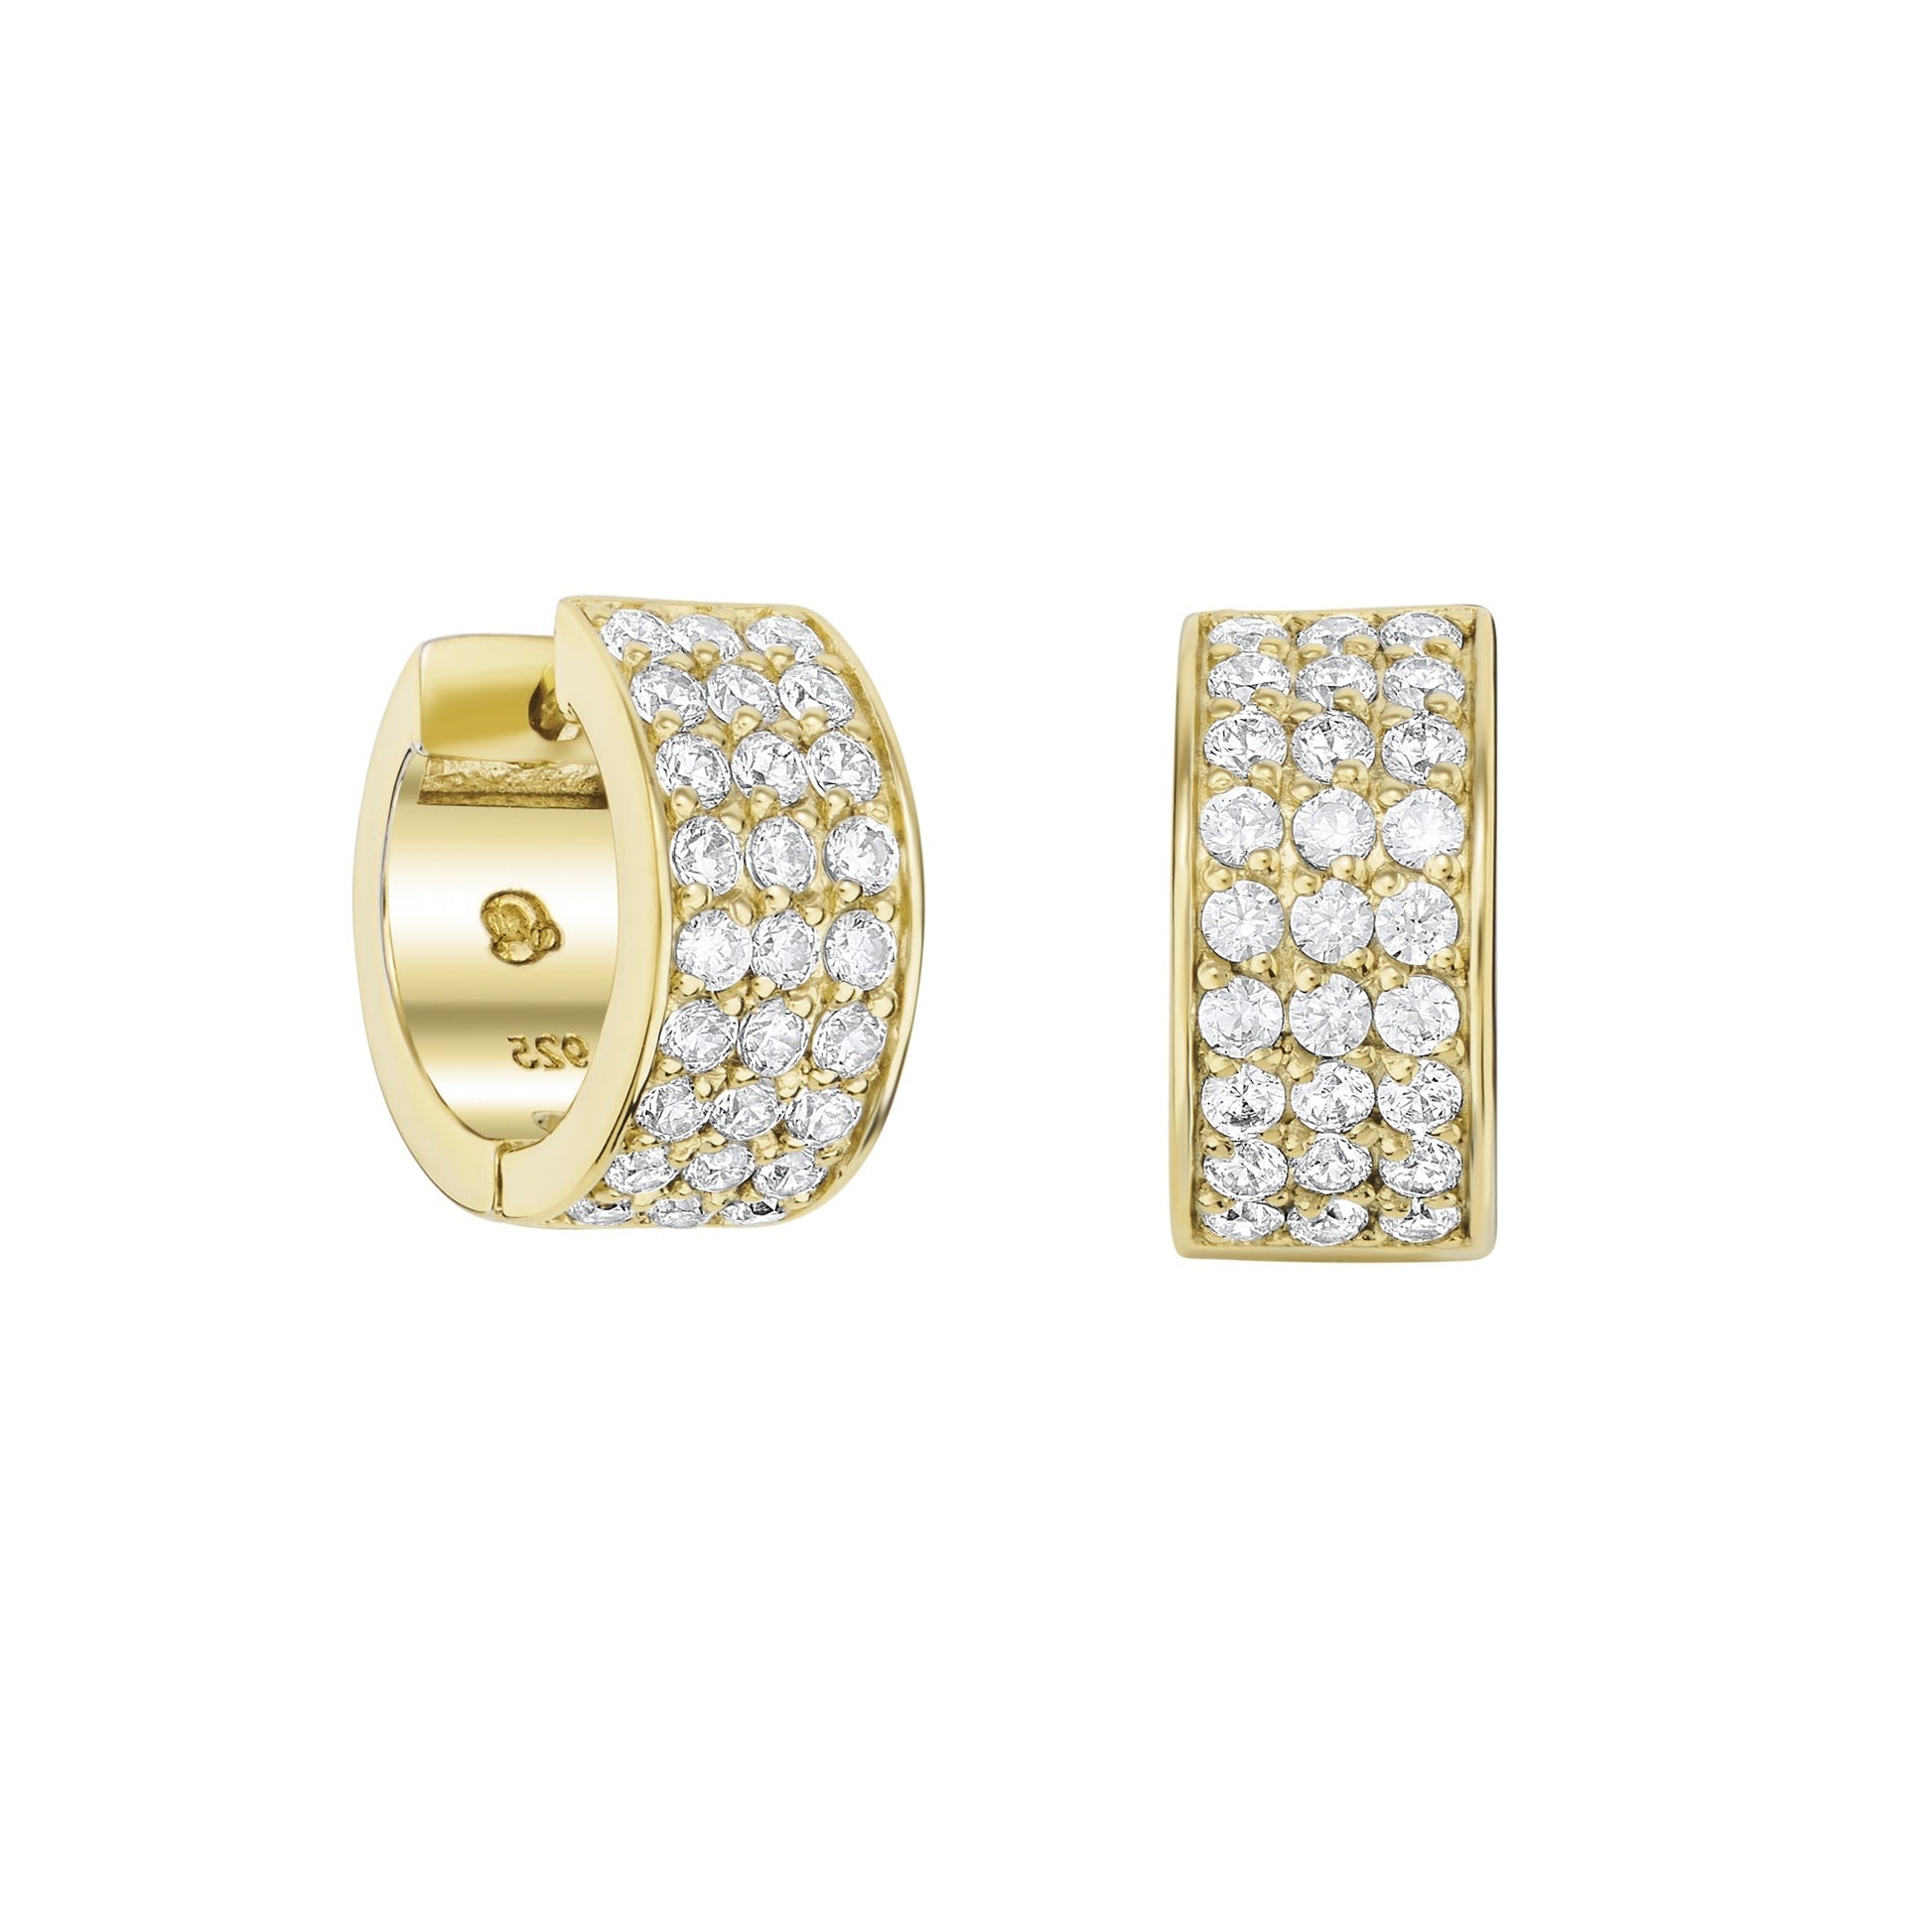 Candor Huggie Earrings, Pair, Gold Vermeil, Alluvial White Topaz - Tea & Tonic Matakana - Monarc Jewellery